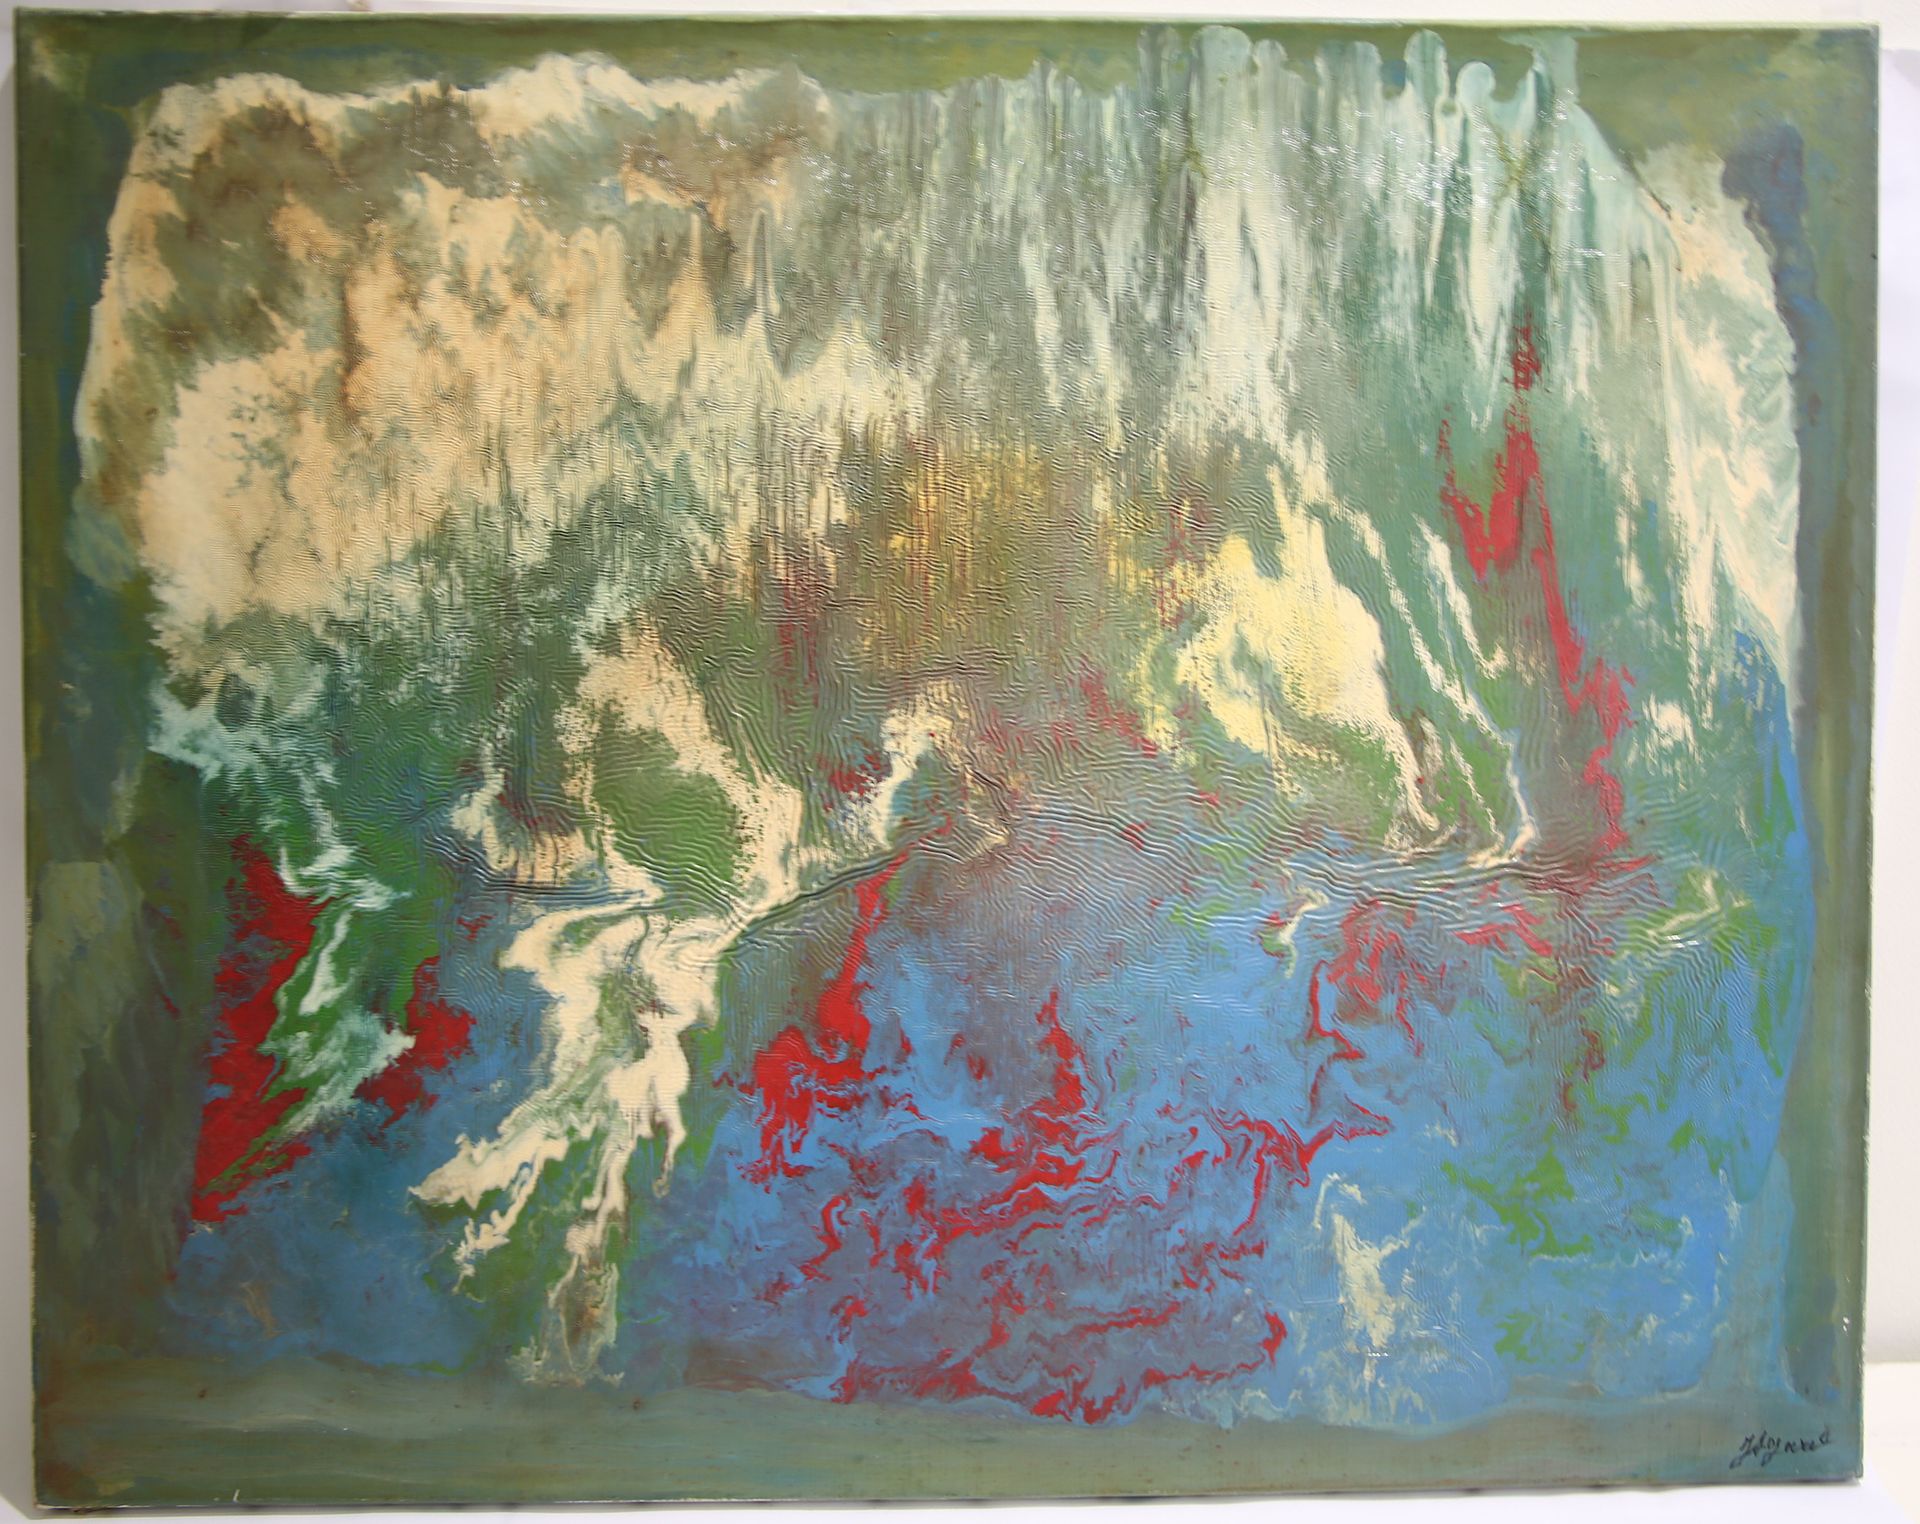 Null 
Jules AGARD

无题，抽象构成" 1974年

布面油画，右下方有签名，背面有日期

尺寸：63 x 80厘米左右